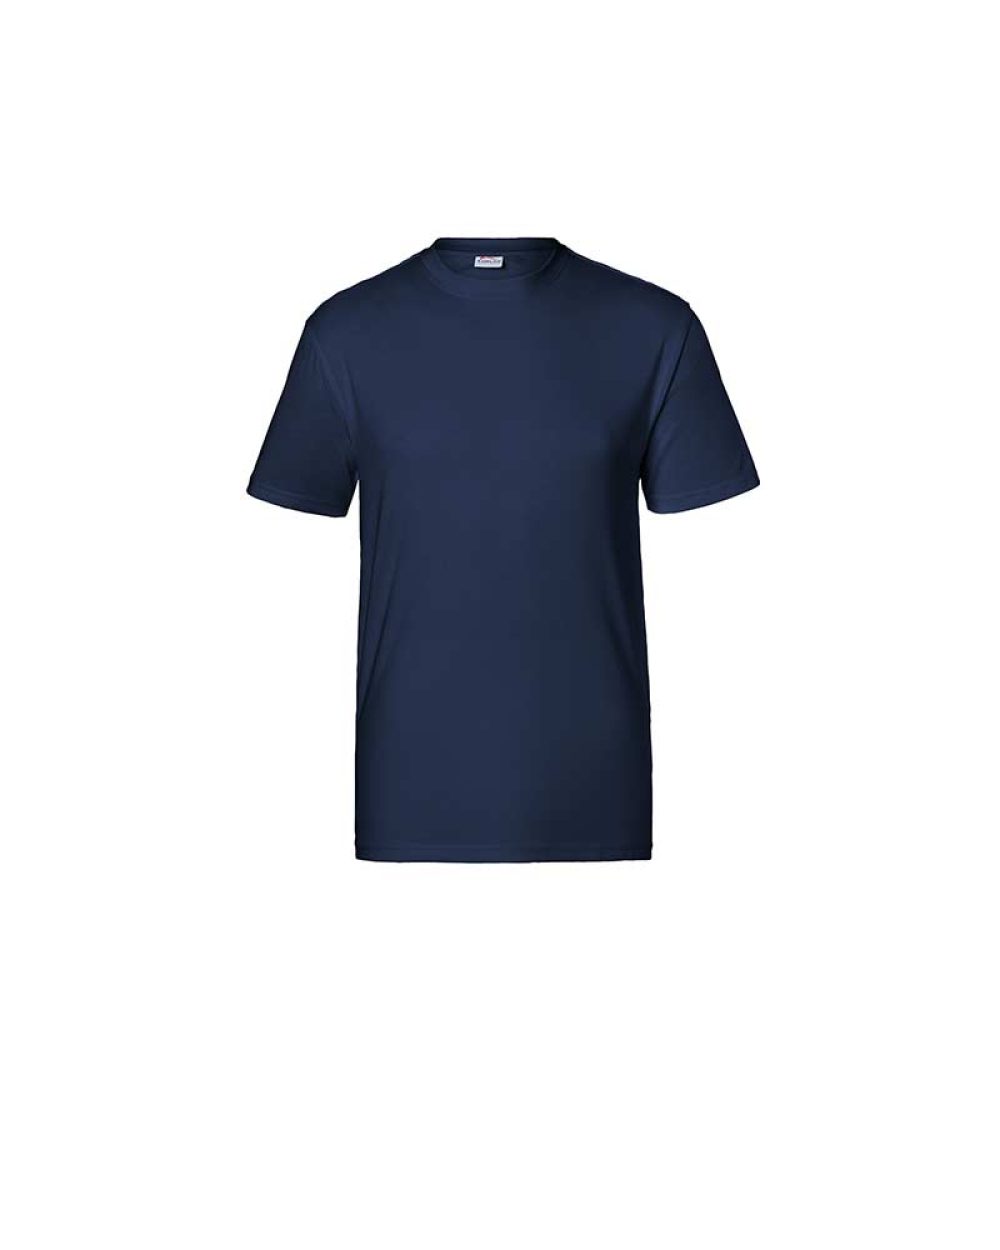 kuebler-t-shirt-shirts-5124-6538-48